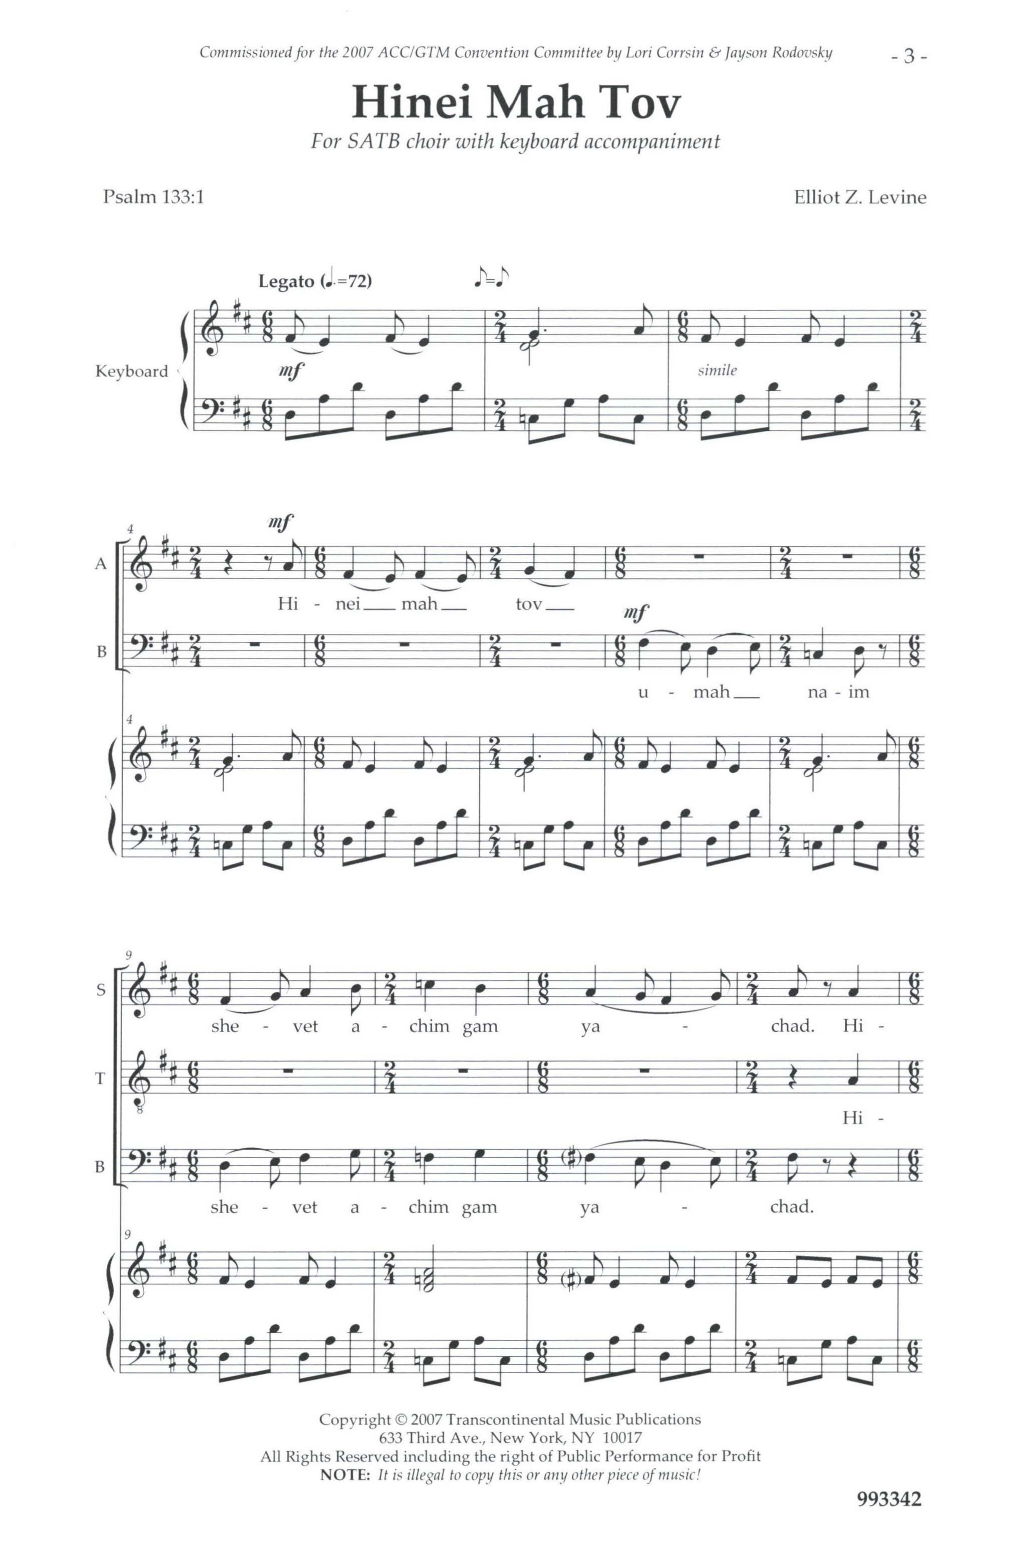 Elliot Levine Hinei Mah Tov Sheet Music Notes & Chords for SATB Choir - Download or Print PDF